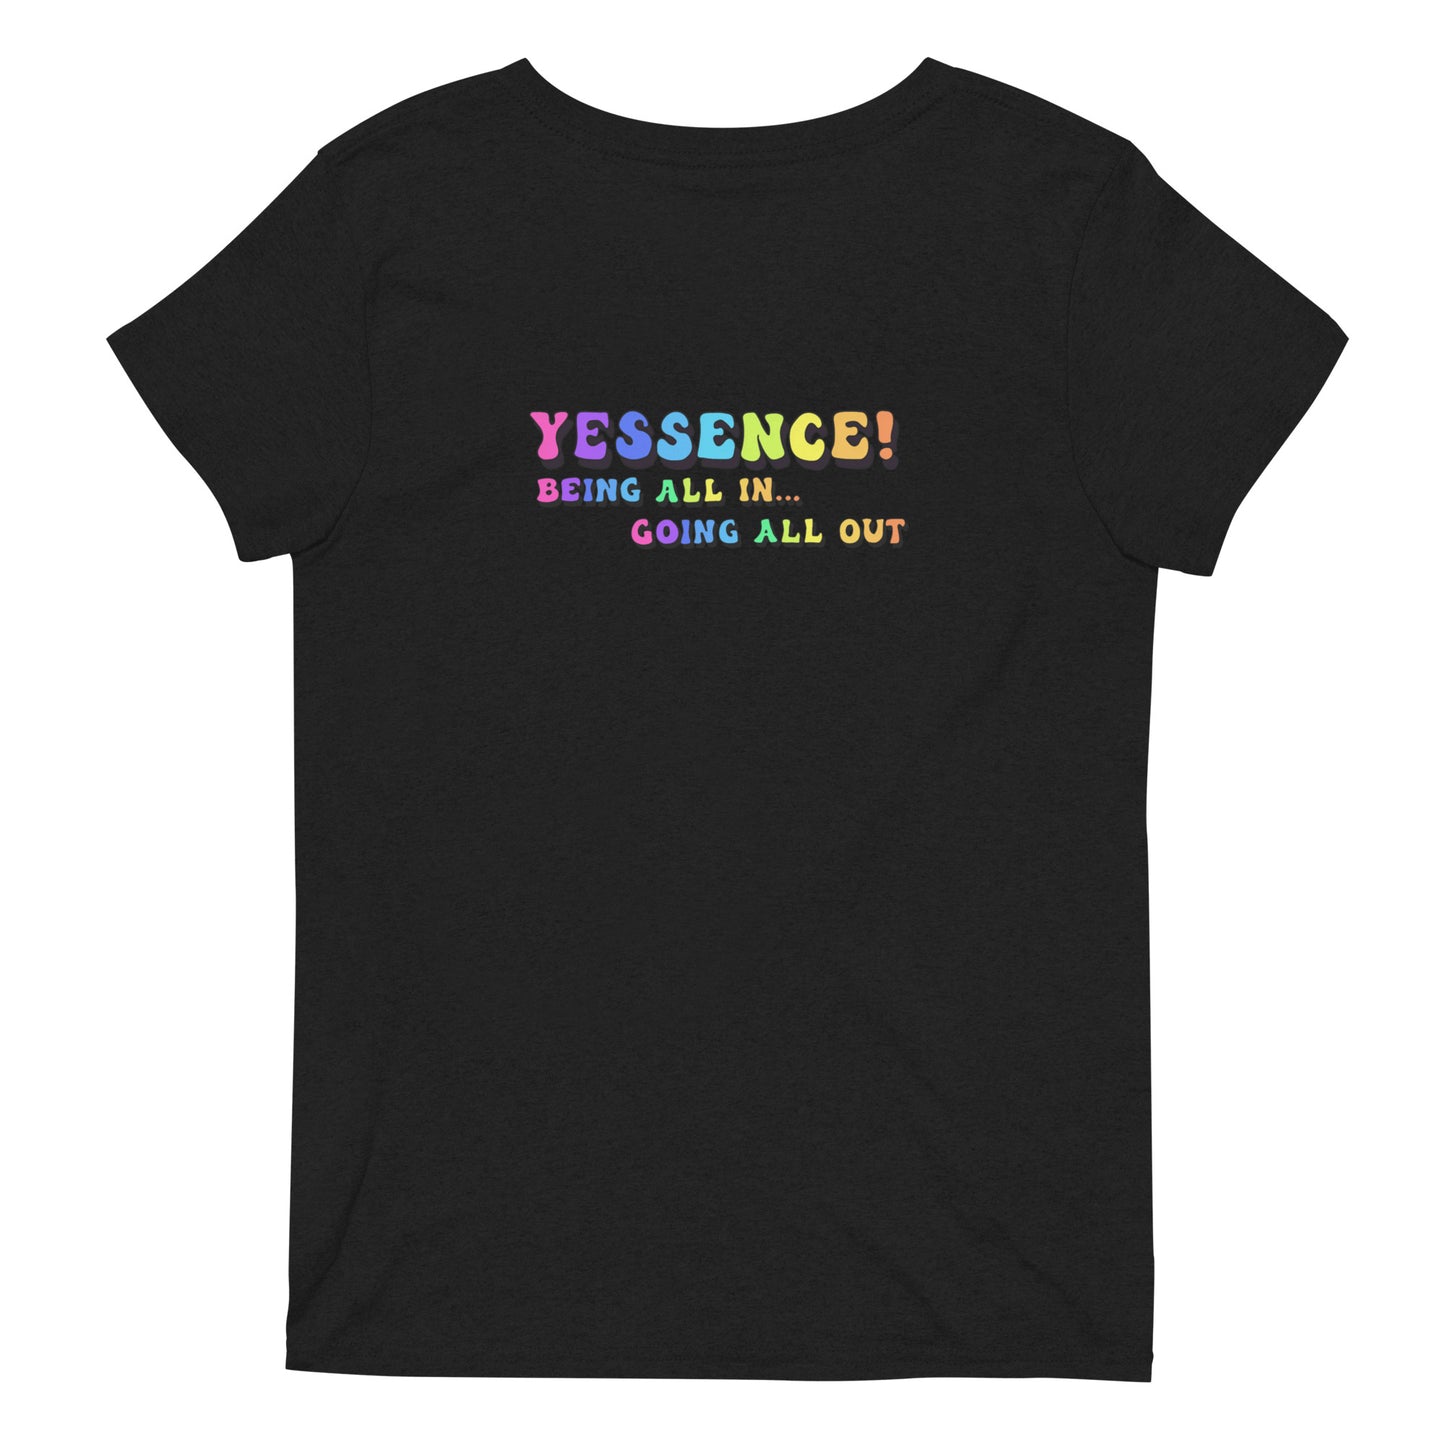 Women’s YESSENCE! Eco-Friendly V-neck T-shirt